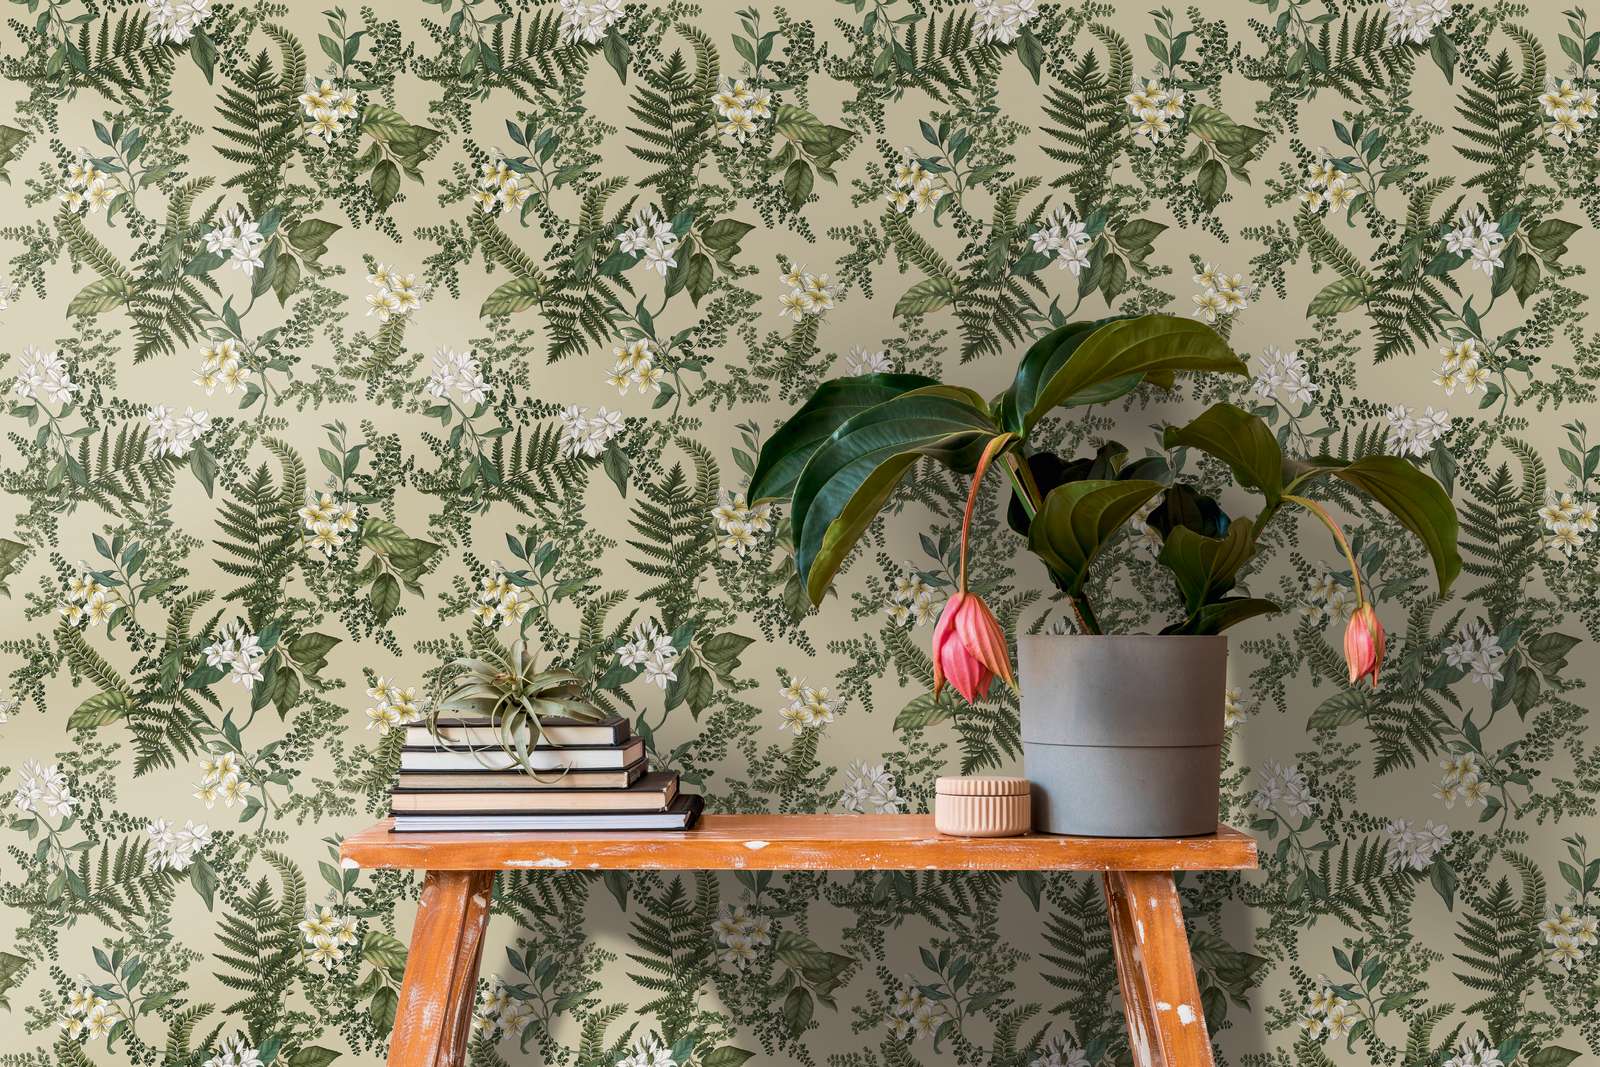             Floral style wallpaper with flowers & grasses textured matt - green, dark green, white
        